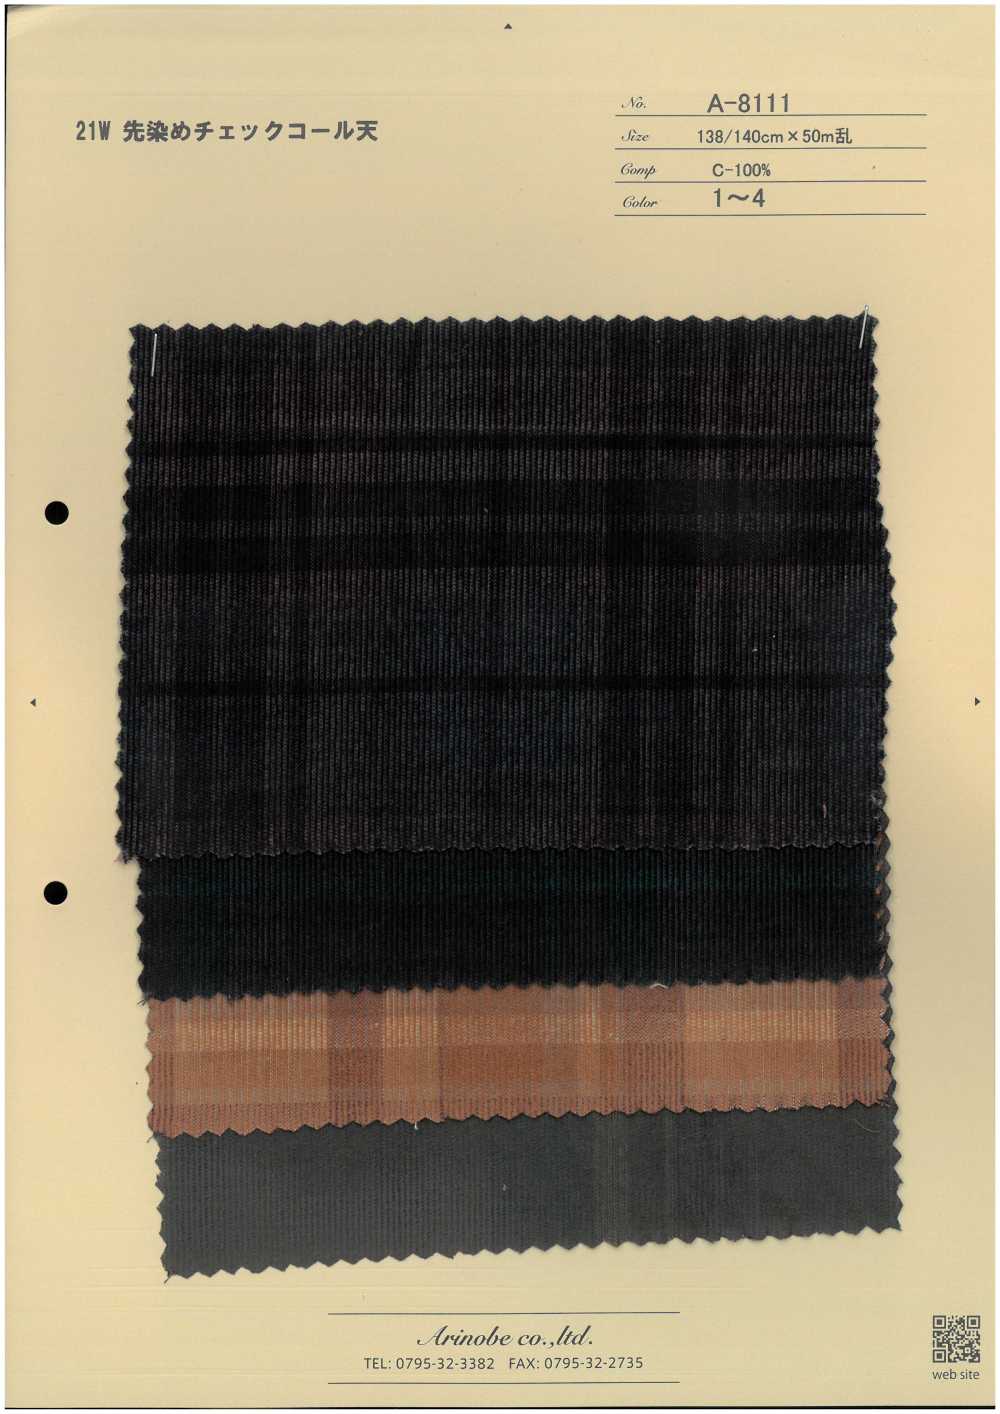 A-8111 21W Yarn Dyed Check Corduroy[Textile / Fabric] ARINOBE CO., LTD.